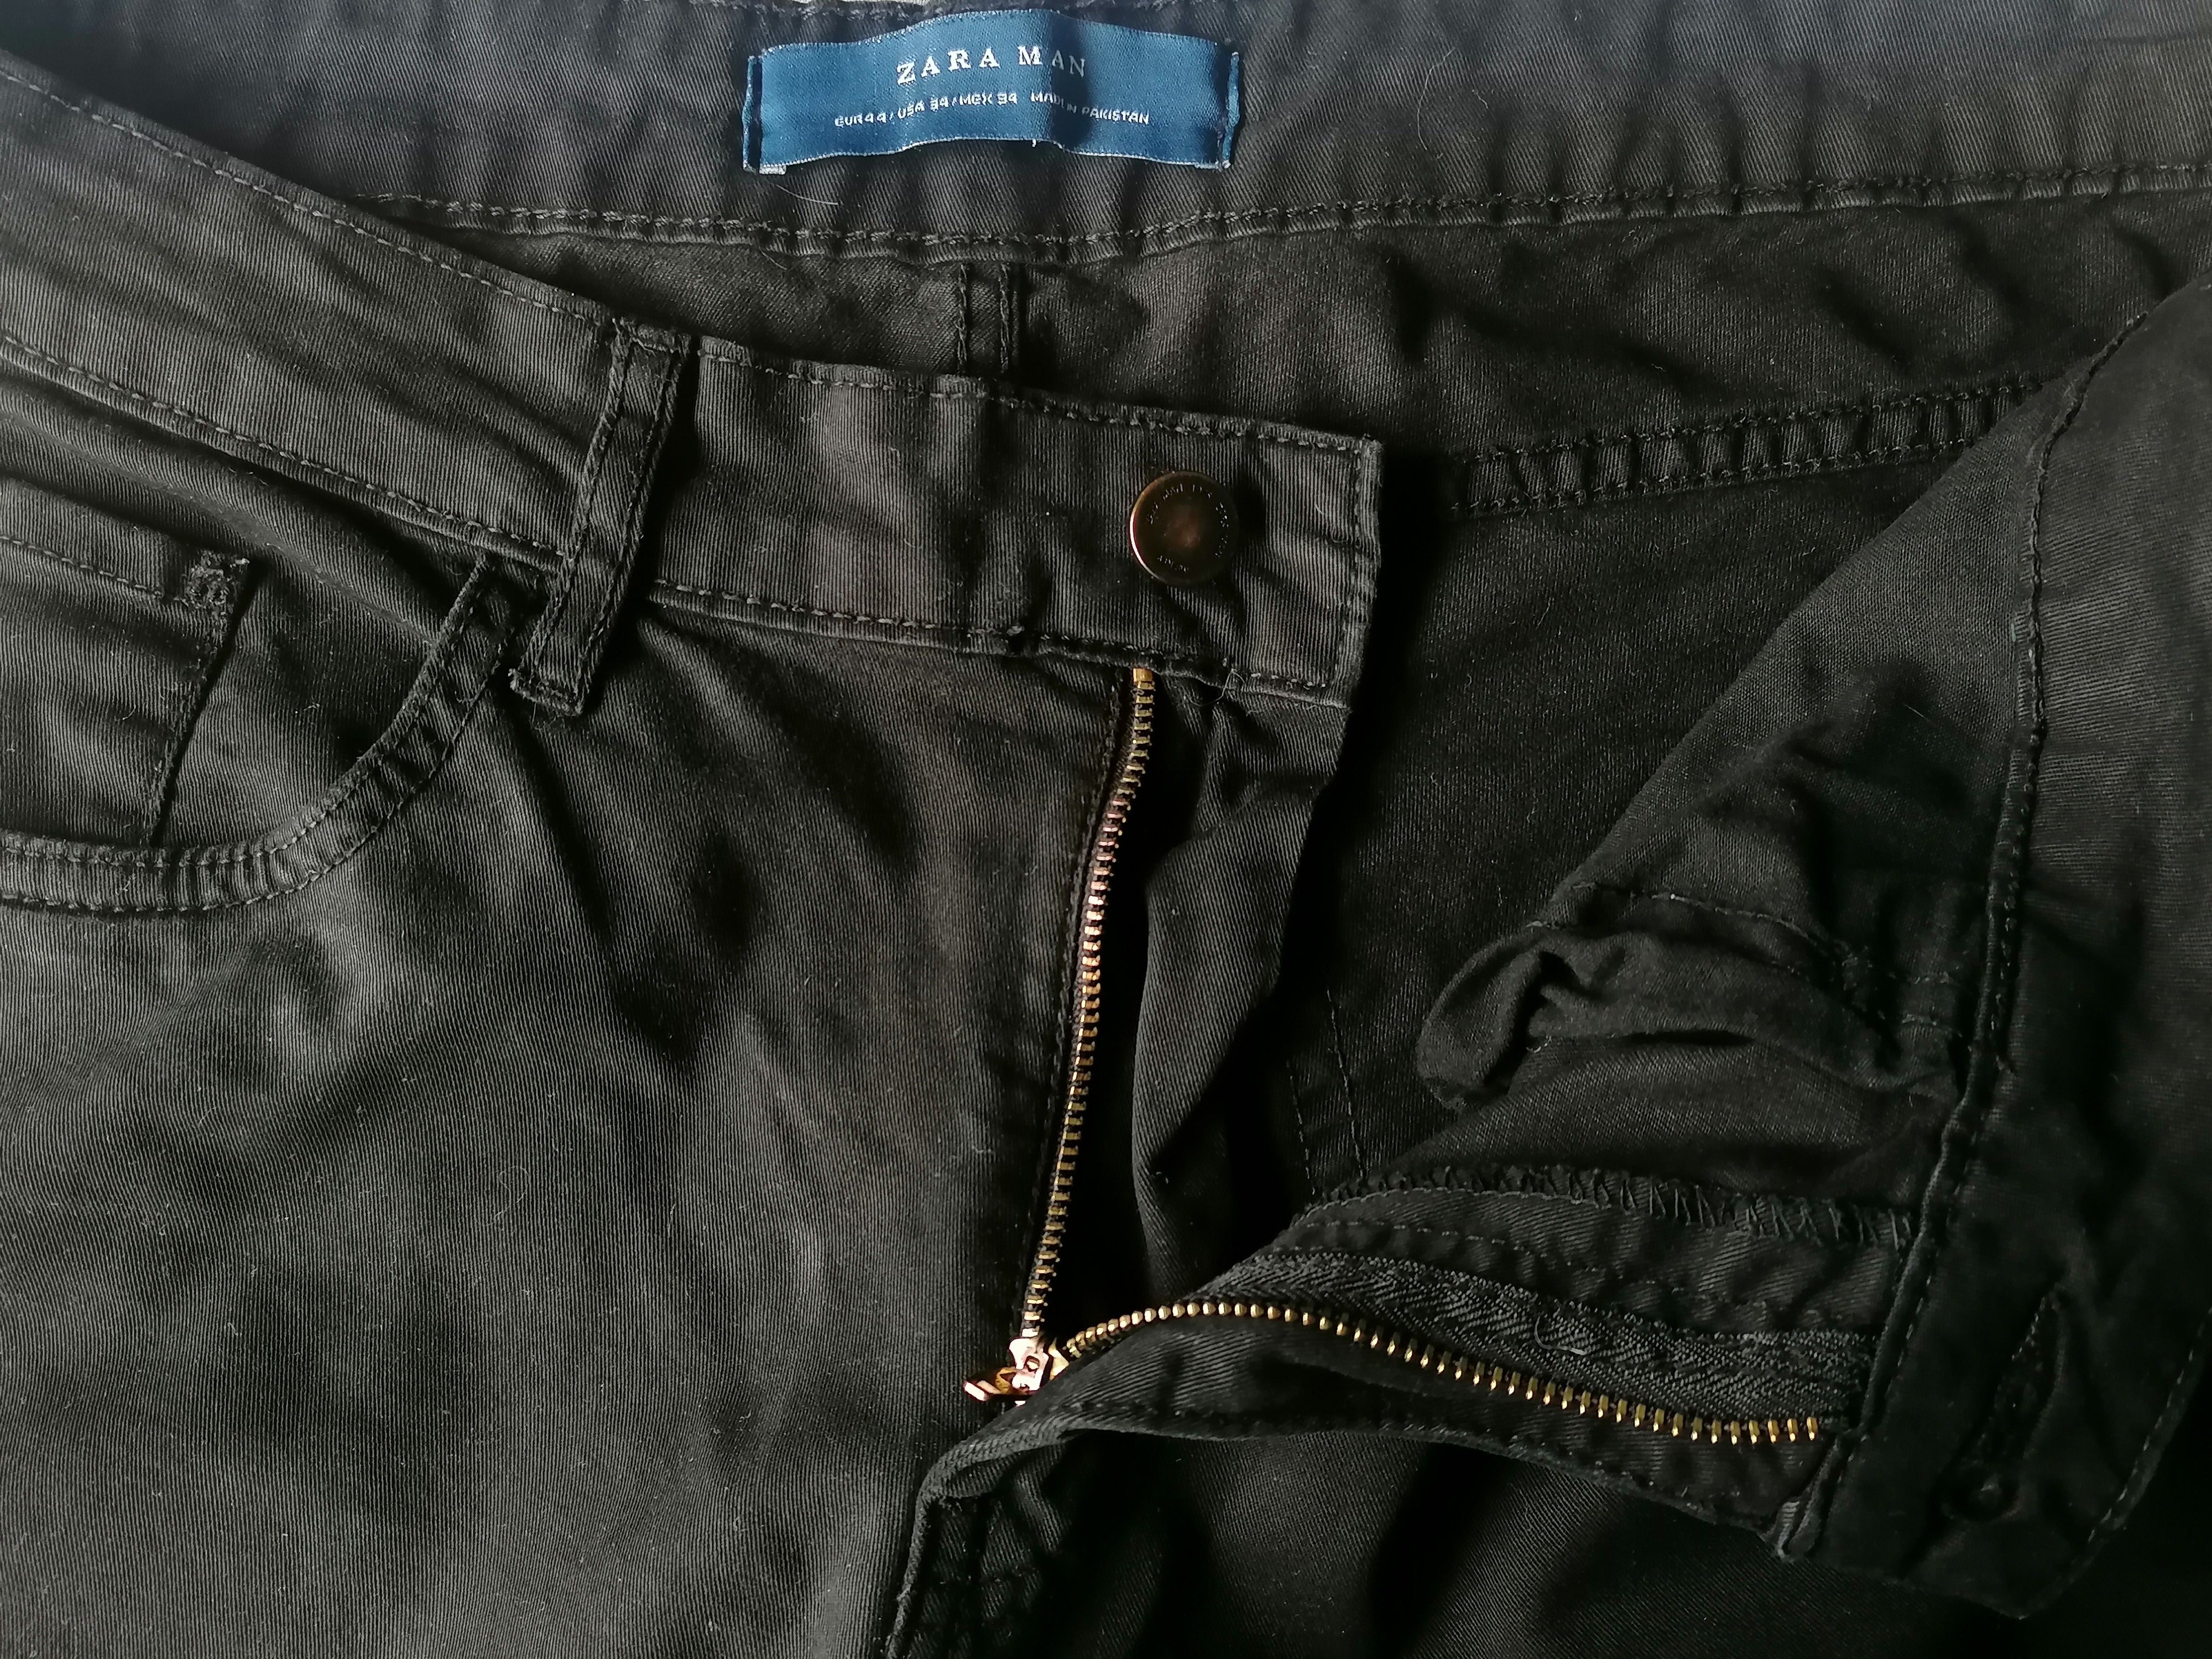 Pantalones de Zara Man. negro. Tamaño 44 | EcoGents